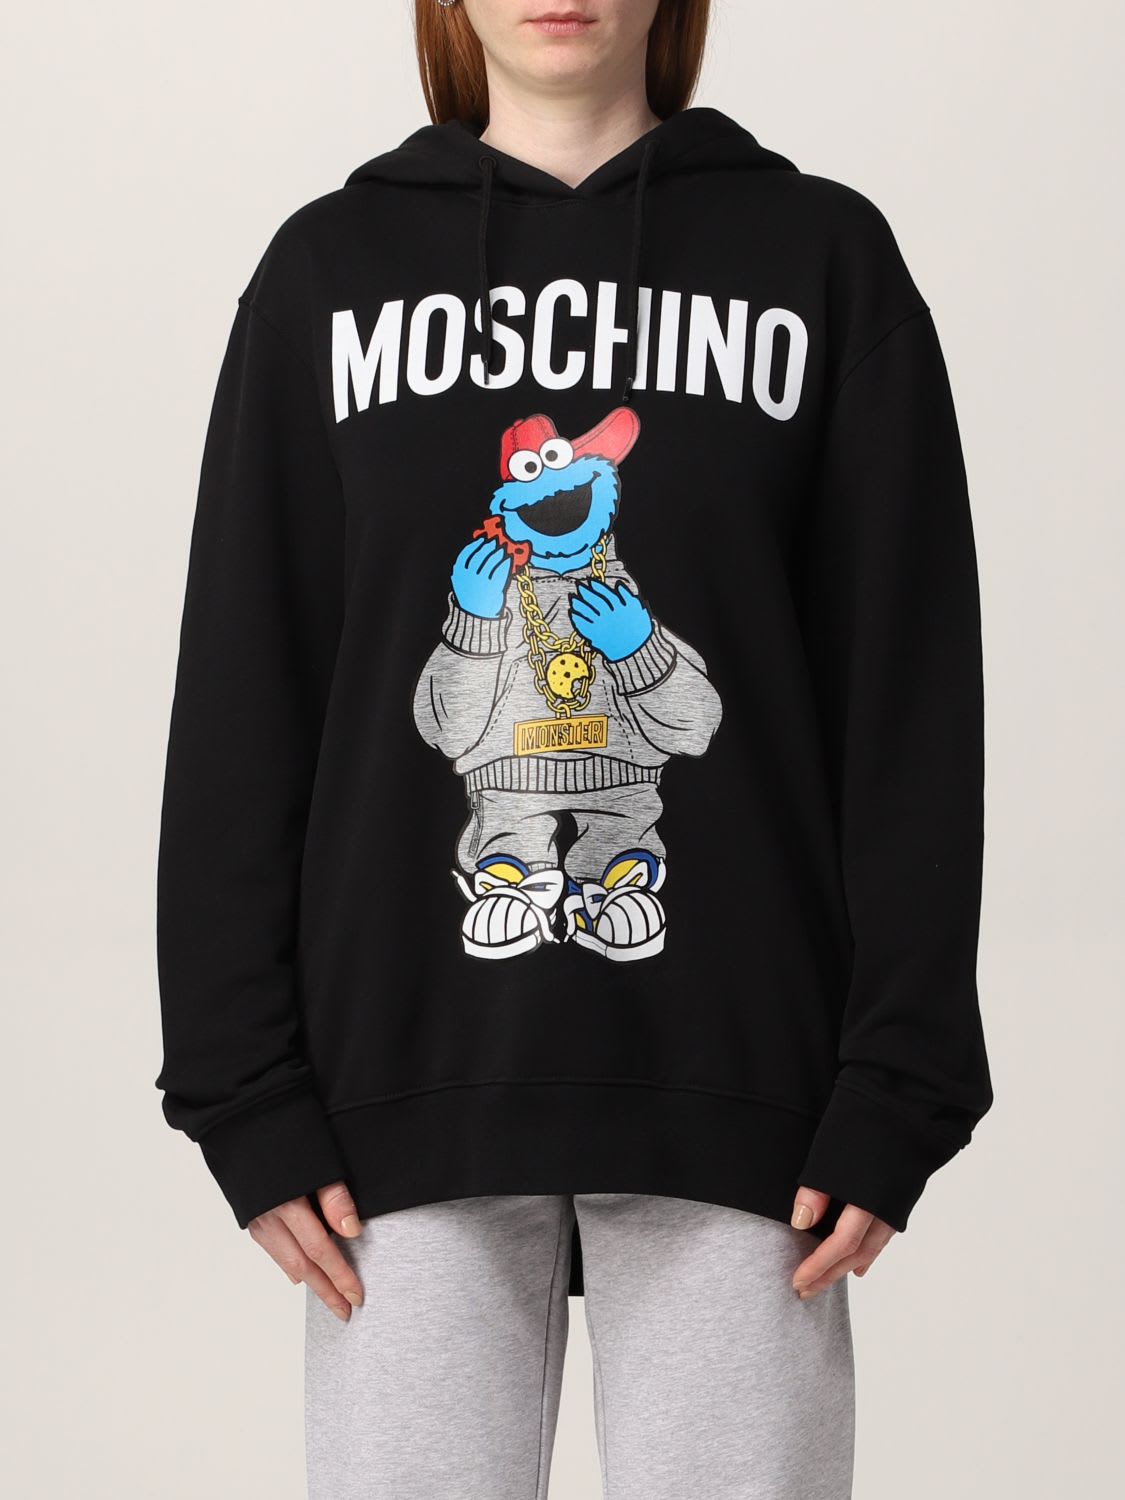 Moschino Couture Sweatshirt Sesame Street Moschino Couture Sweatshirt